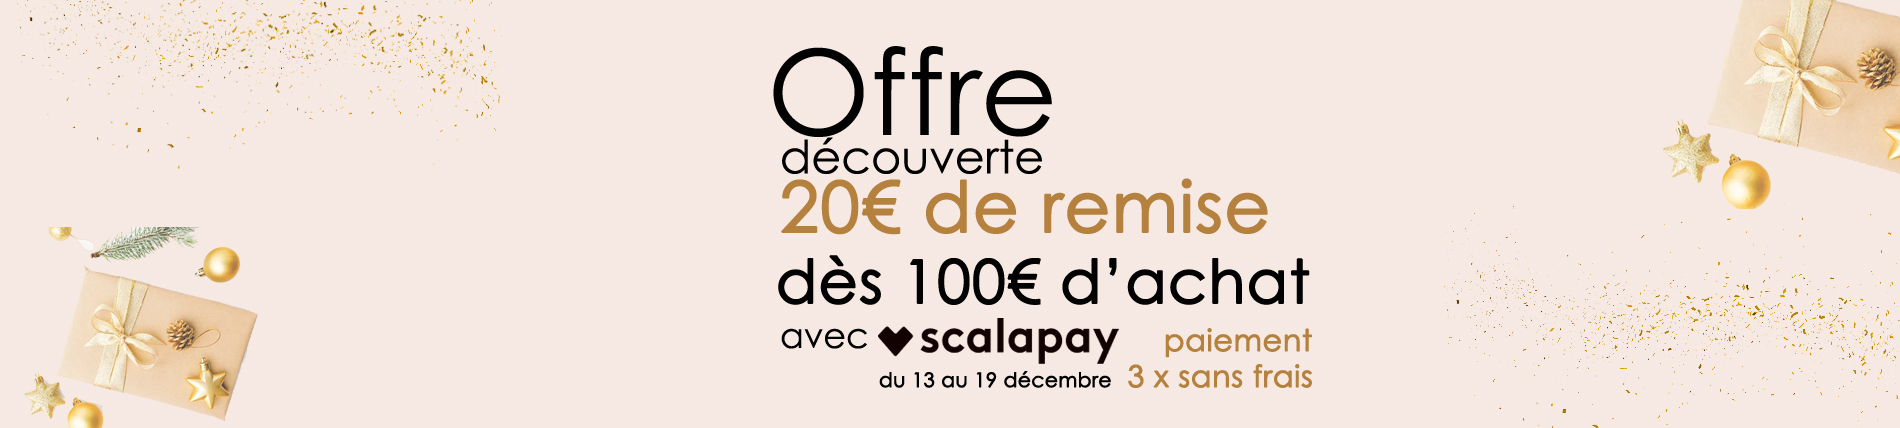 Offre Scalapay x Incenza 20 € offerts dès 100 € d'achat